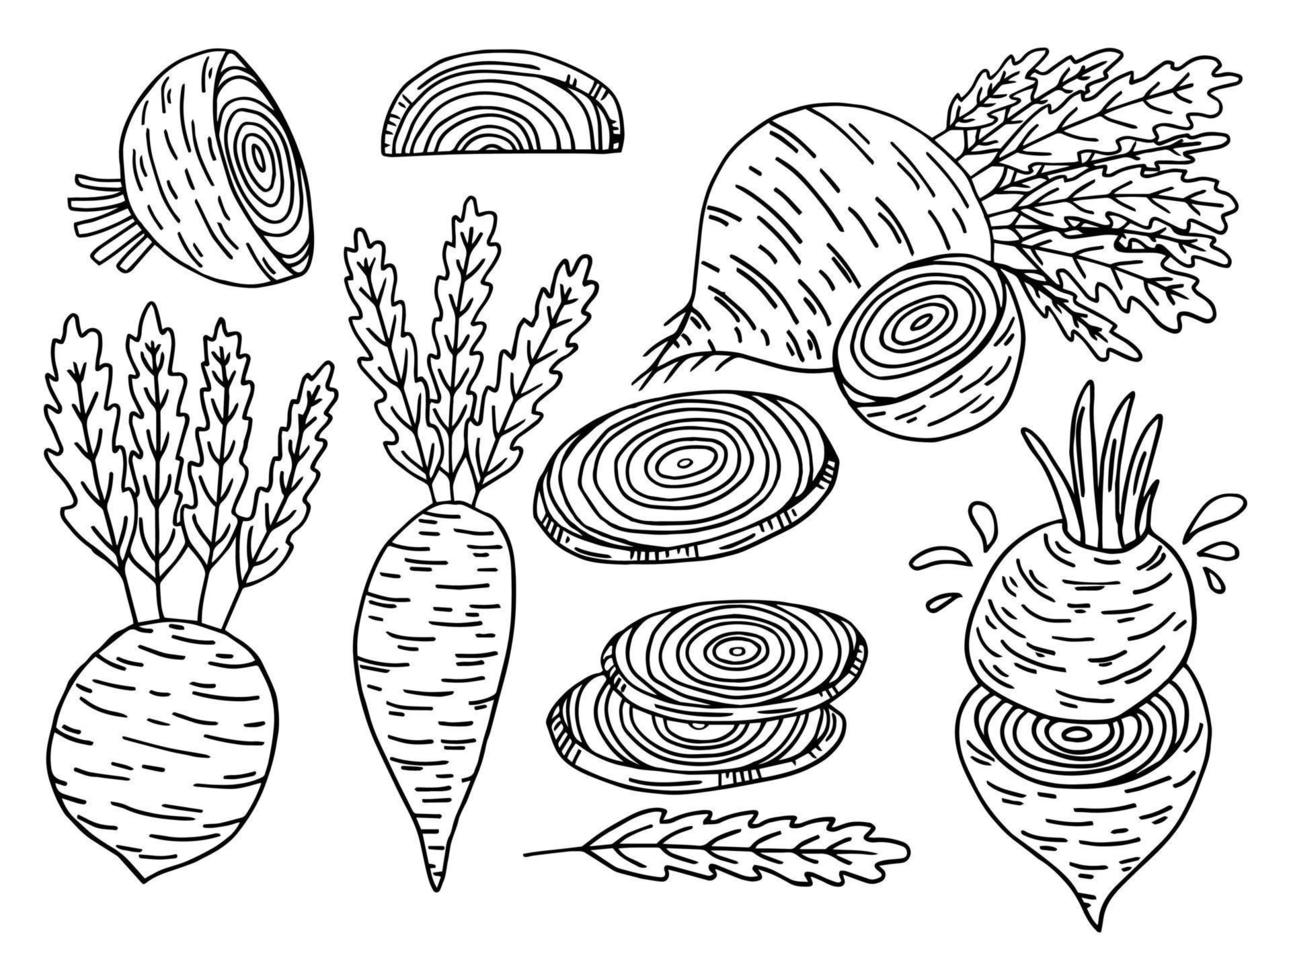 Set of hand drawn beet root. Beet with leafs, half of beet, long beet. Sketch vintage vector illustration.